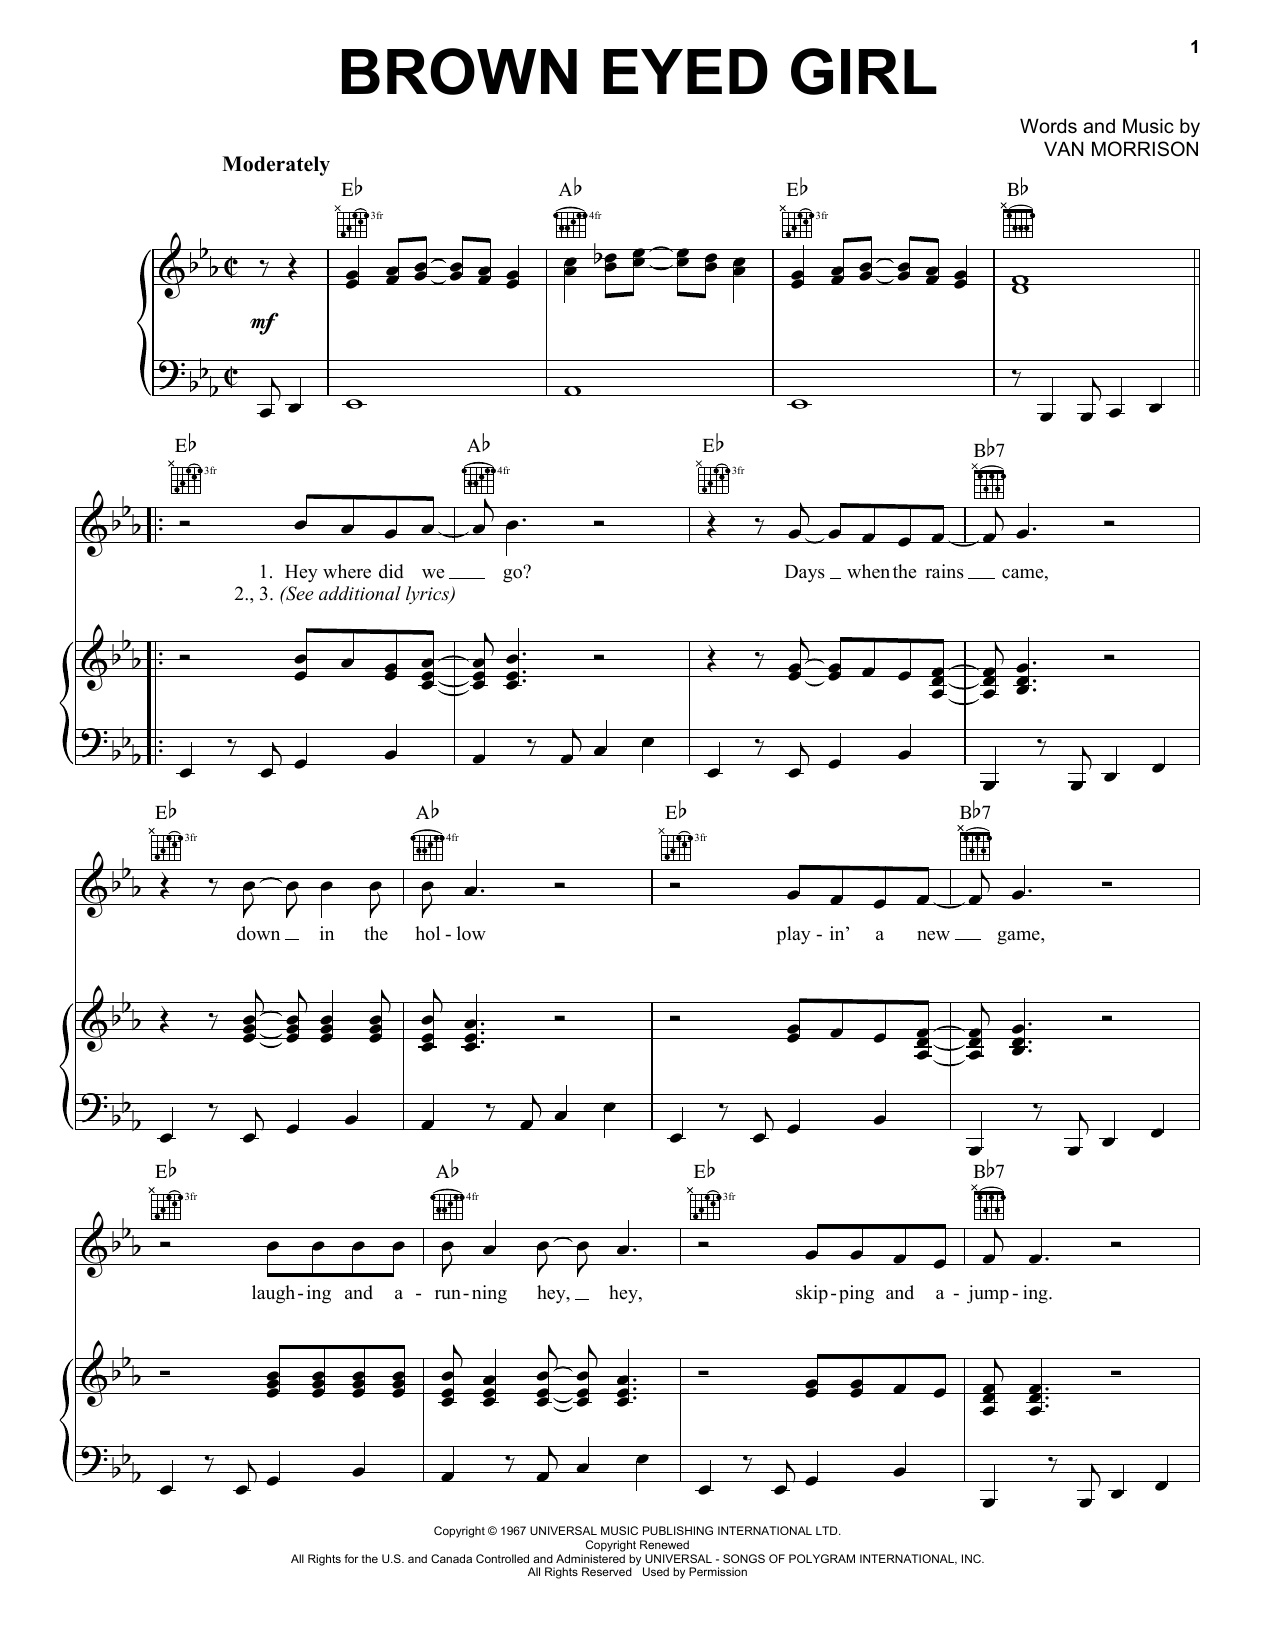 Van Morrison Brown Eyed Girl Sheet Music Notes & Chords for Flute - Download or Print PDF